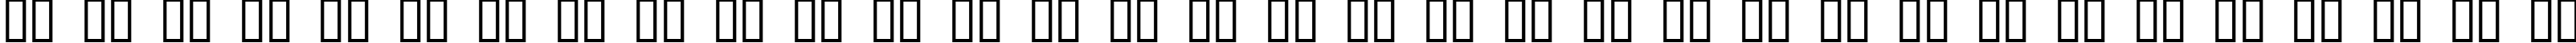 Пример написания русского алфавита шрифтом Parsons Alternate Heavy